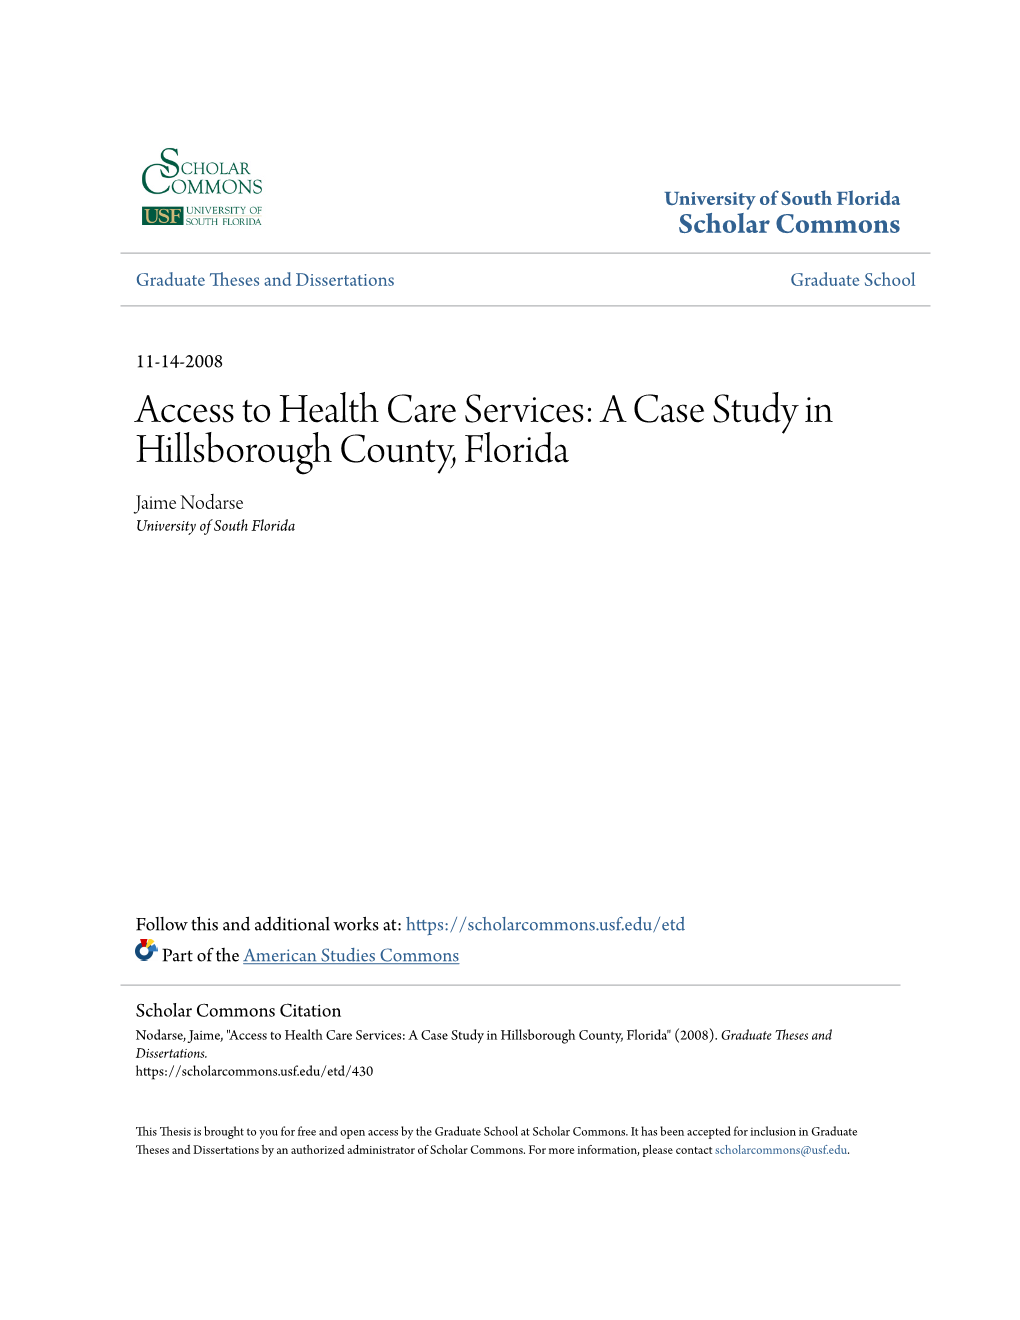 Access to Health Care Services: a Case Study in Hillsborough County, Florida Jaime Nodarse University of South Florida